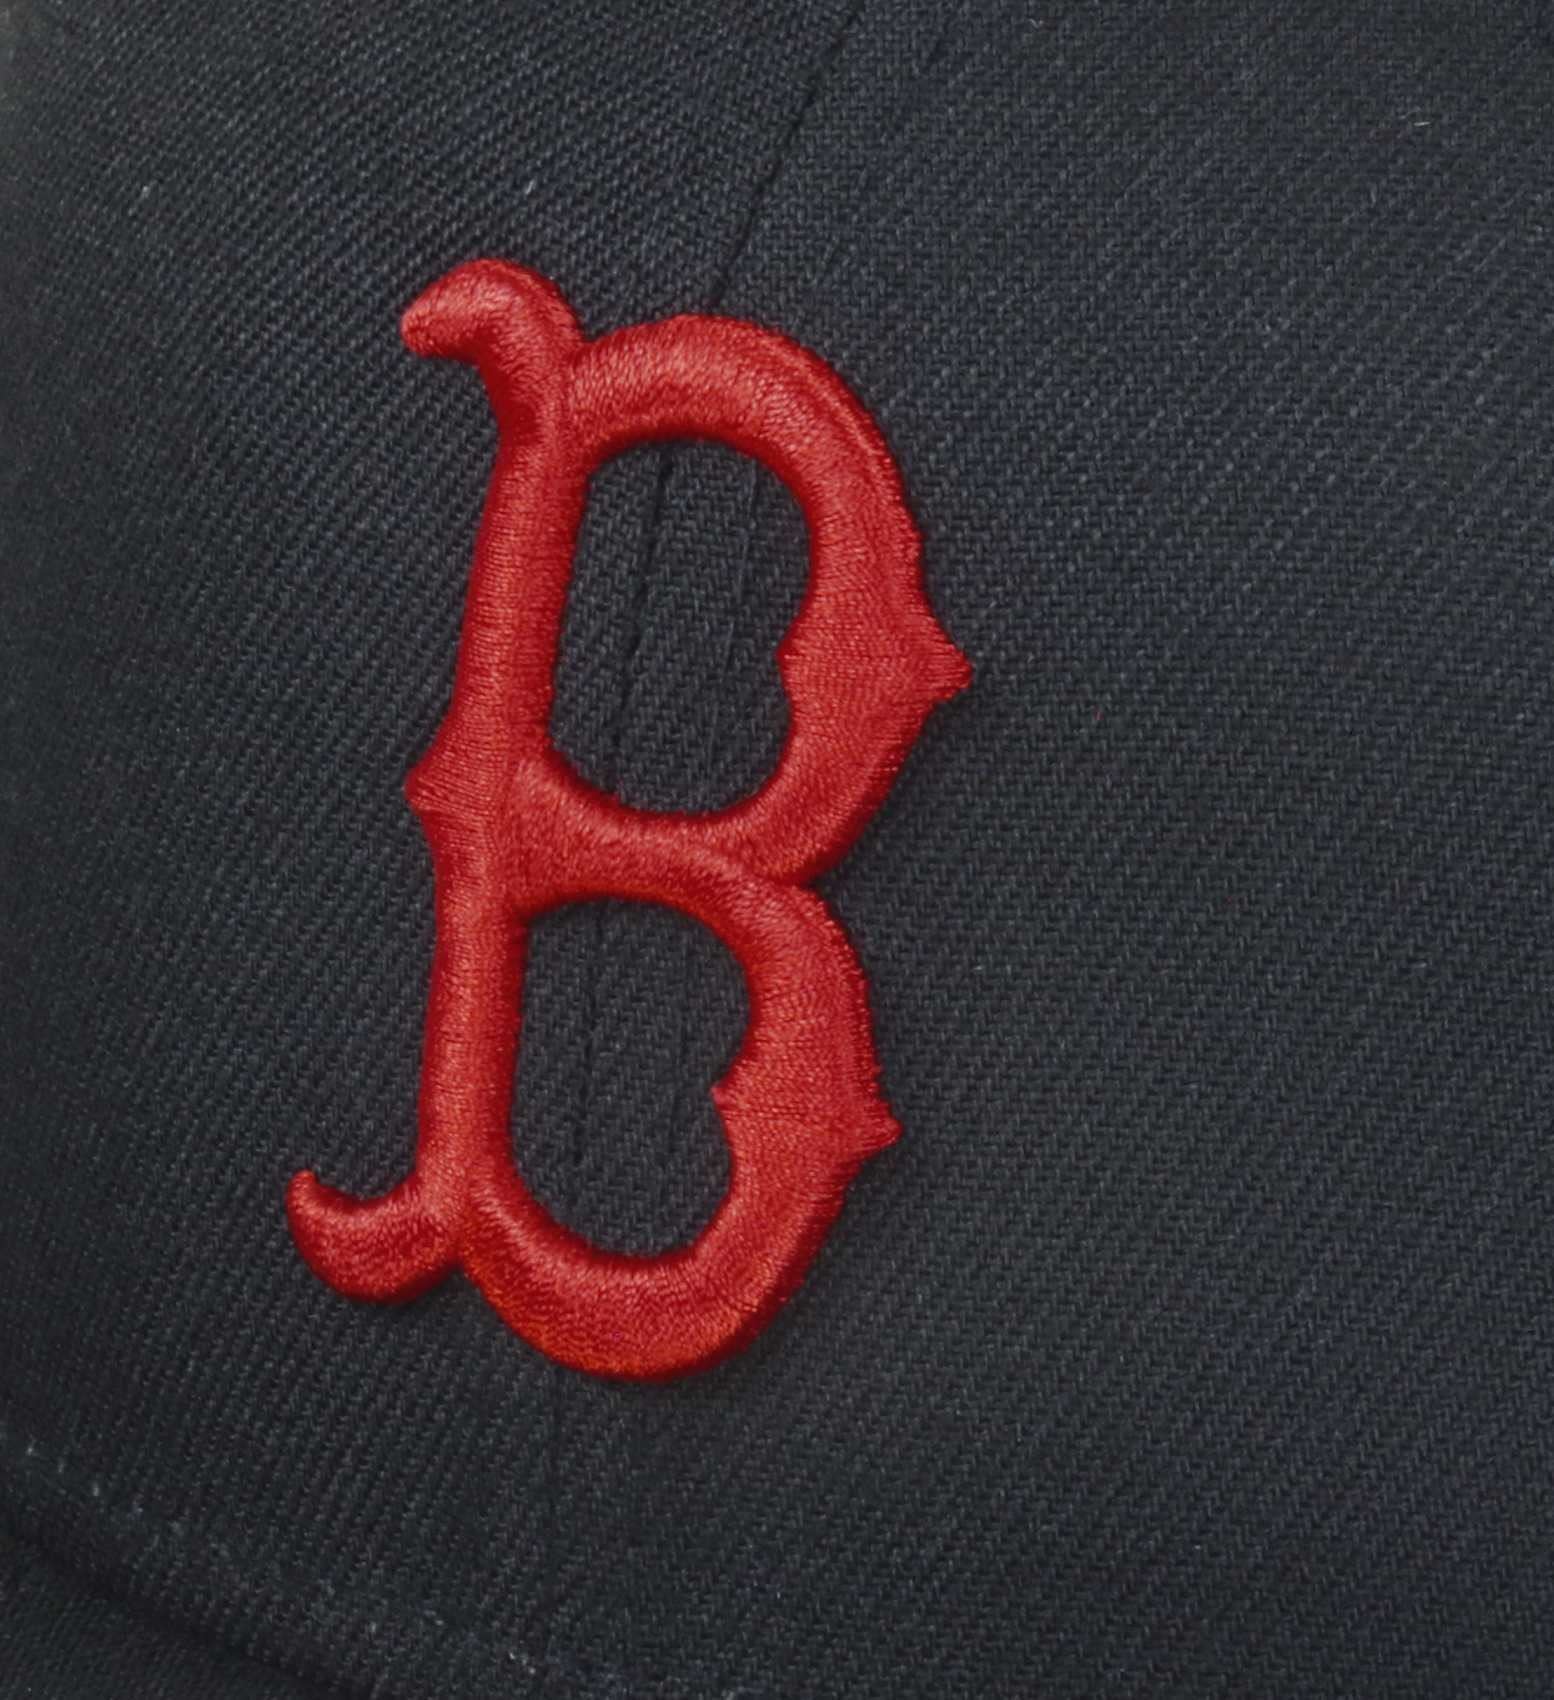 Boston Red Sox Red Logo 59Fifty Basecap New Era